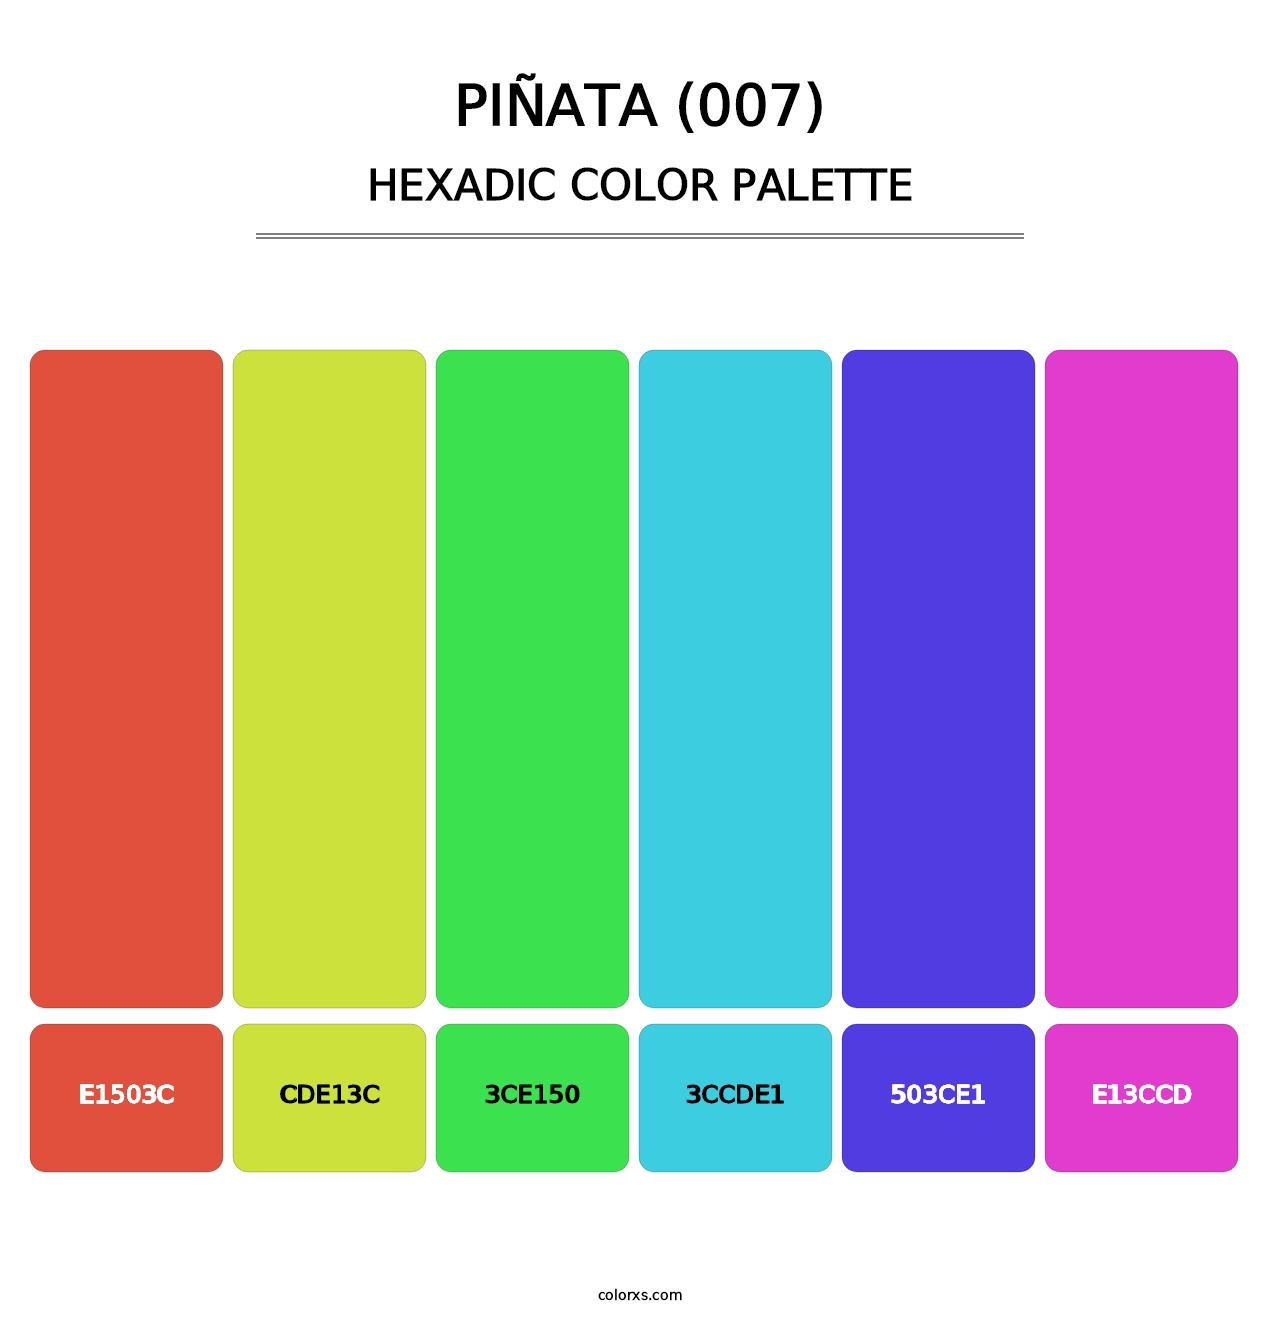 Piñata (007) - Hexadic Color Palette